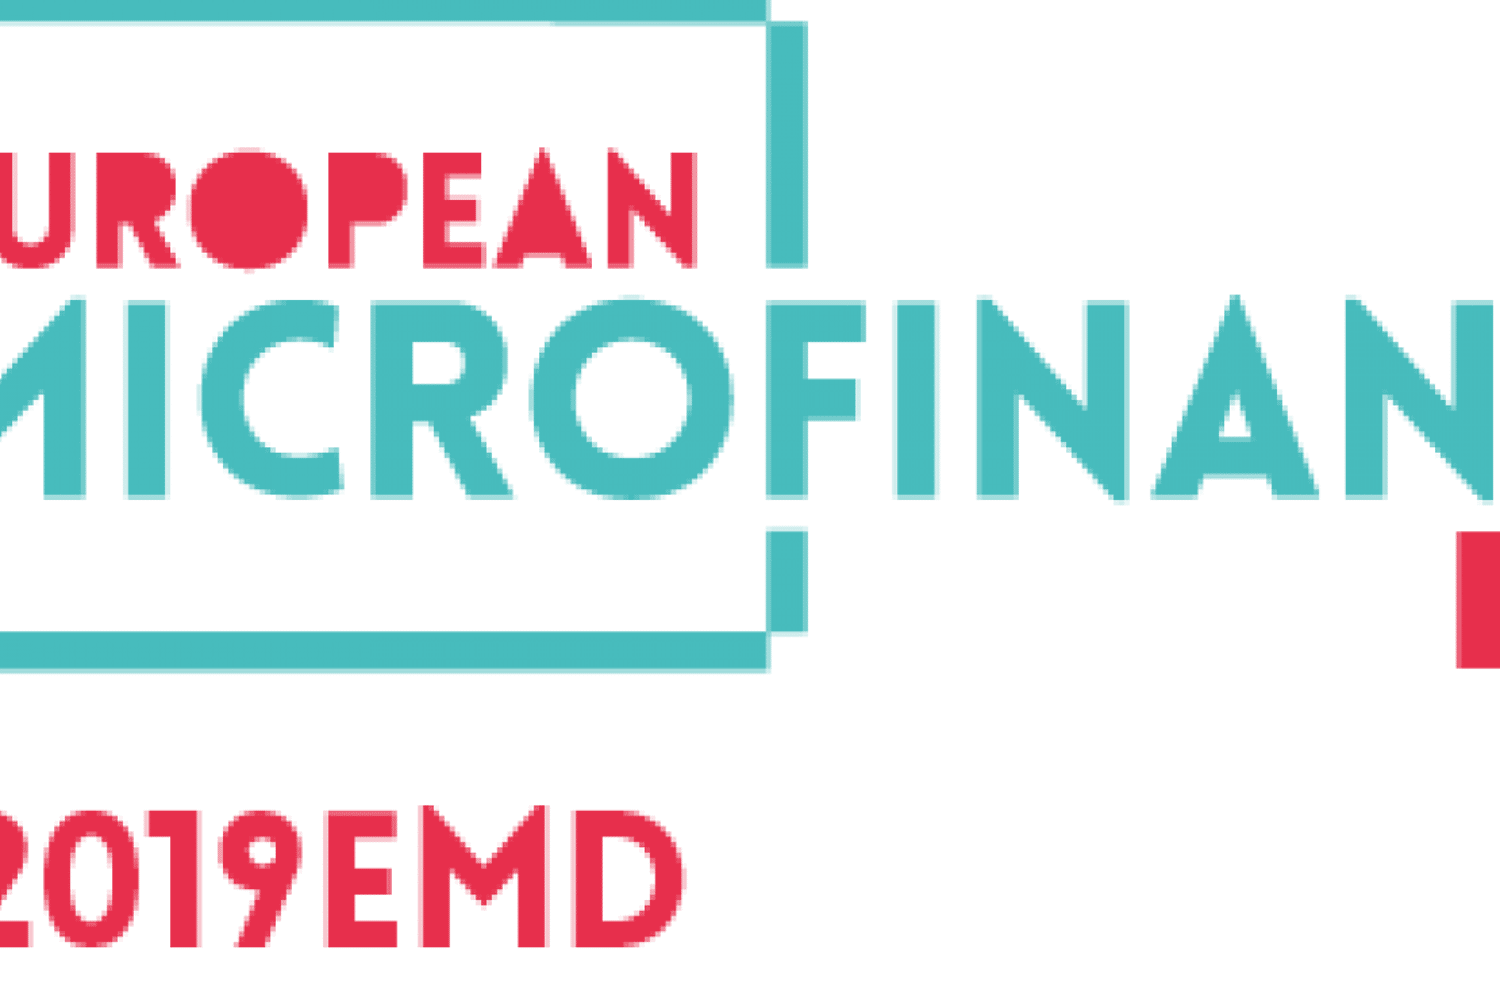 European microfinance